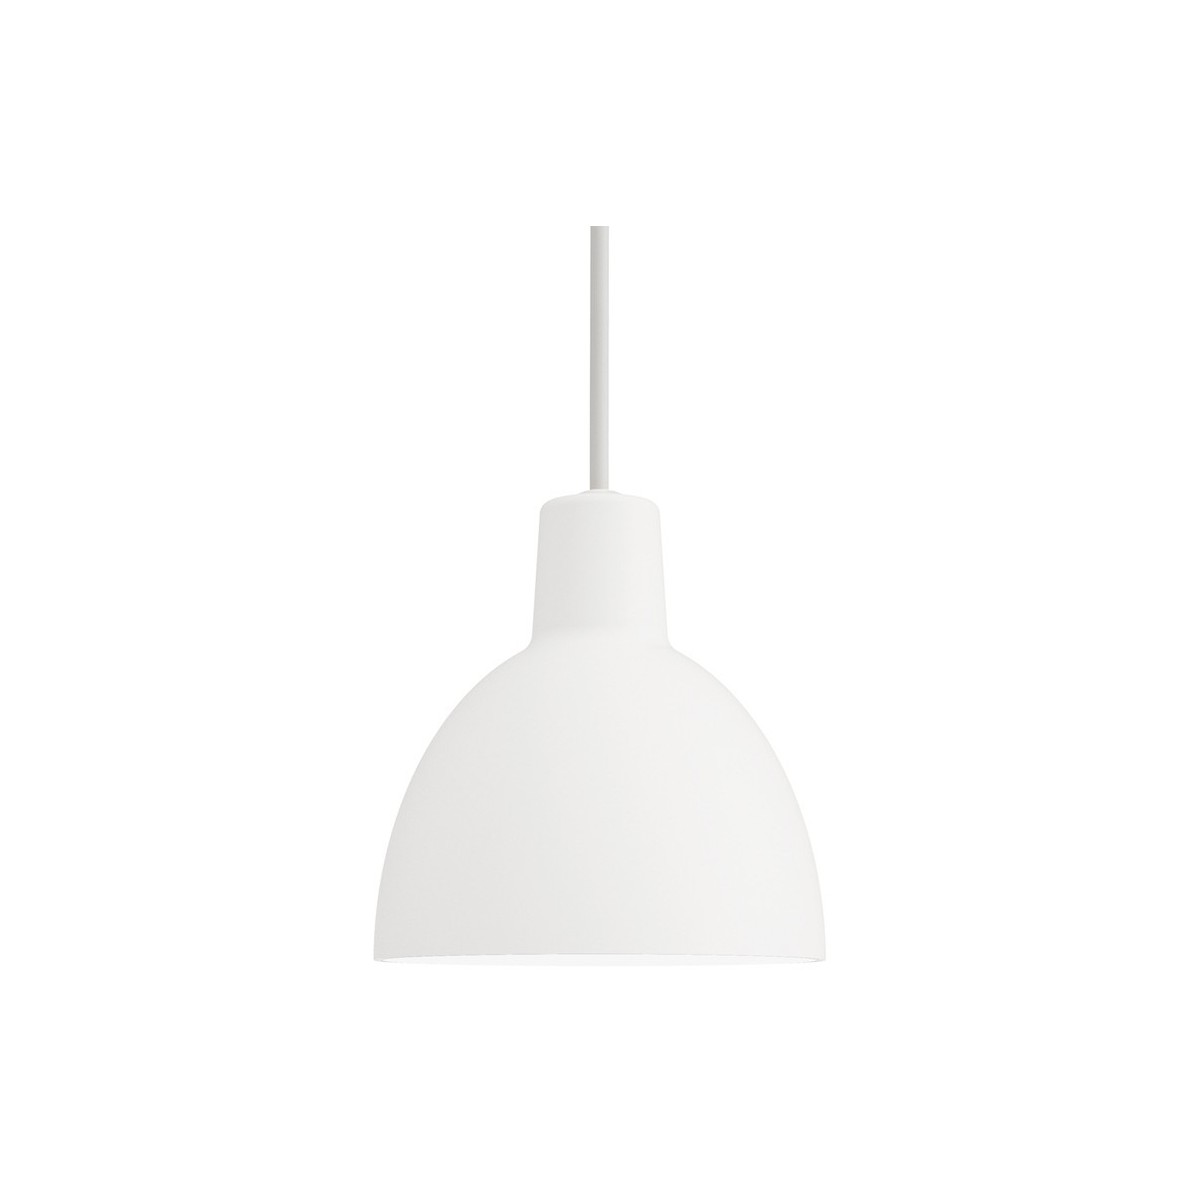 Ø12cm - white - Toldbod 120 pendant lamp